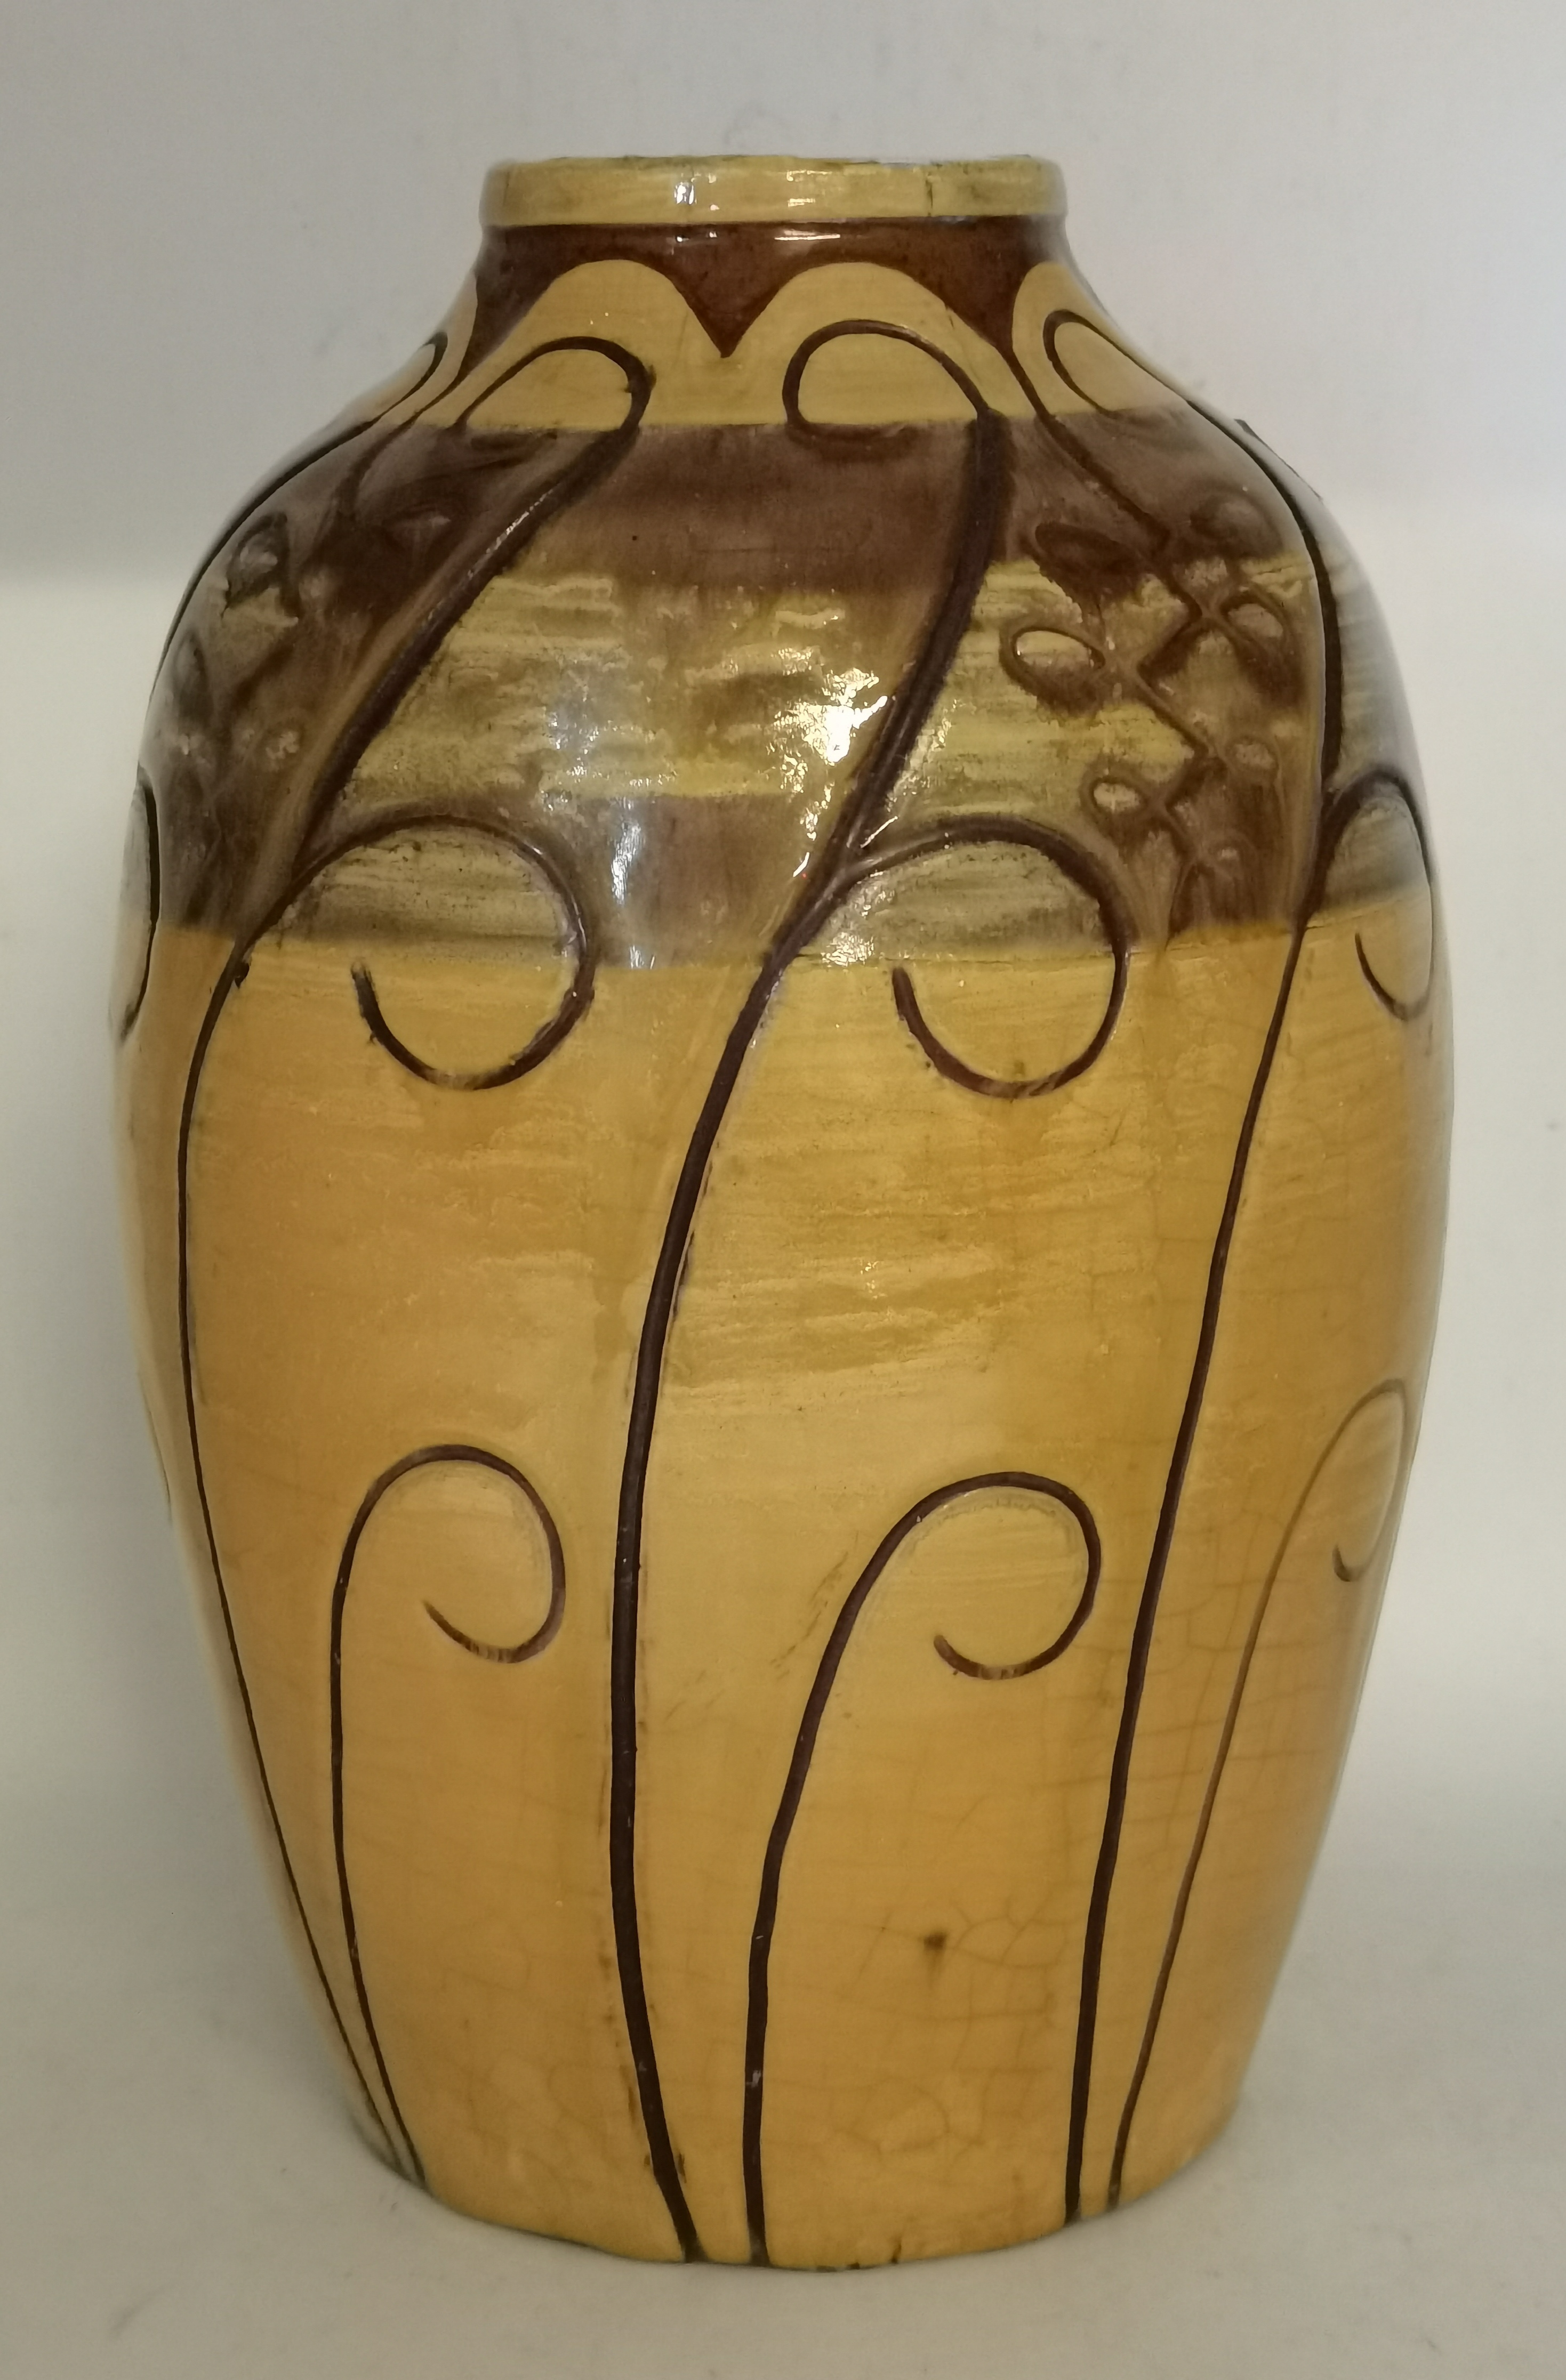 A WILLIAM MODELLIN STOKE vase 1930's - Image 2 of 7